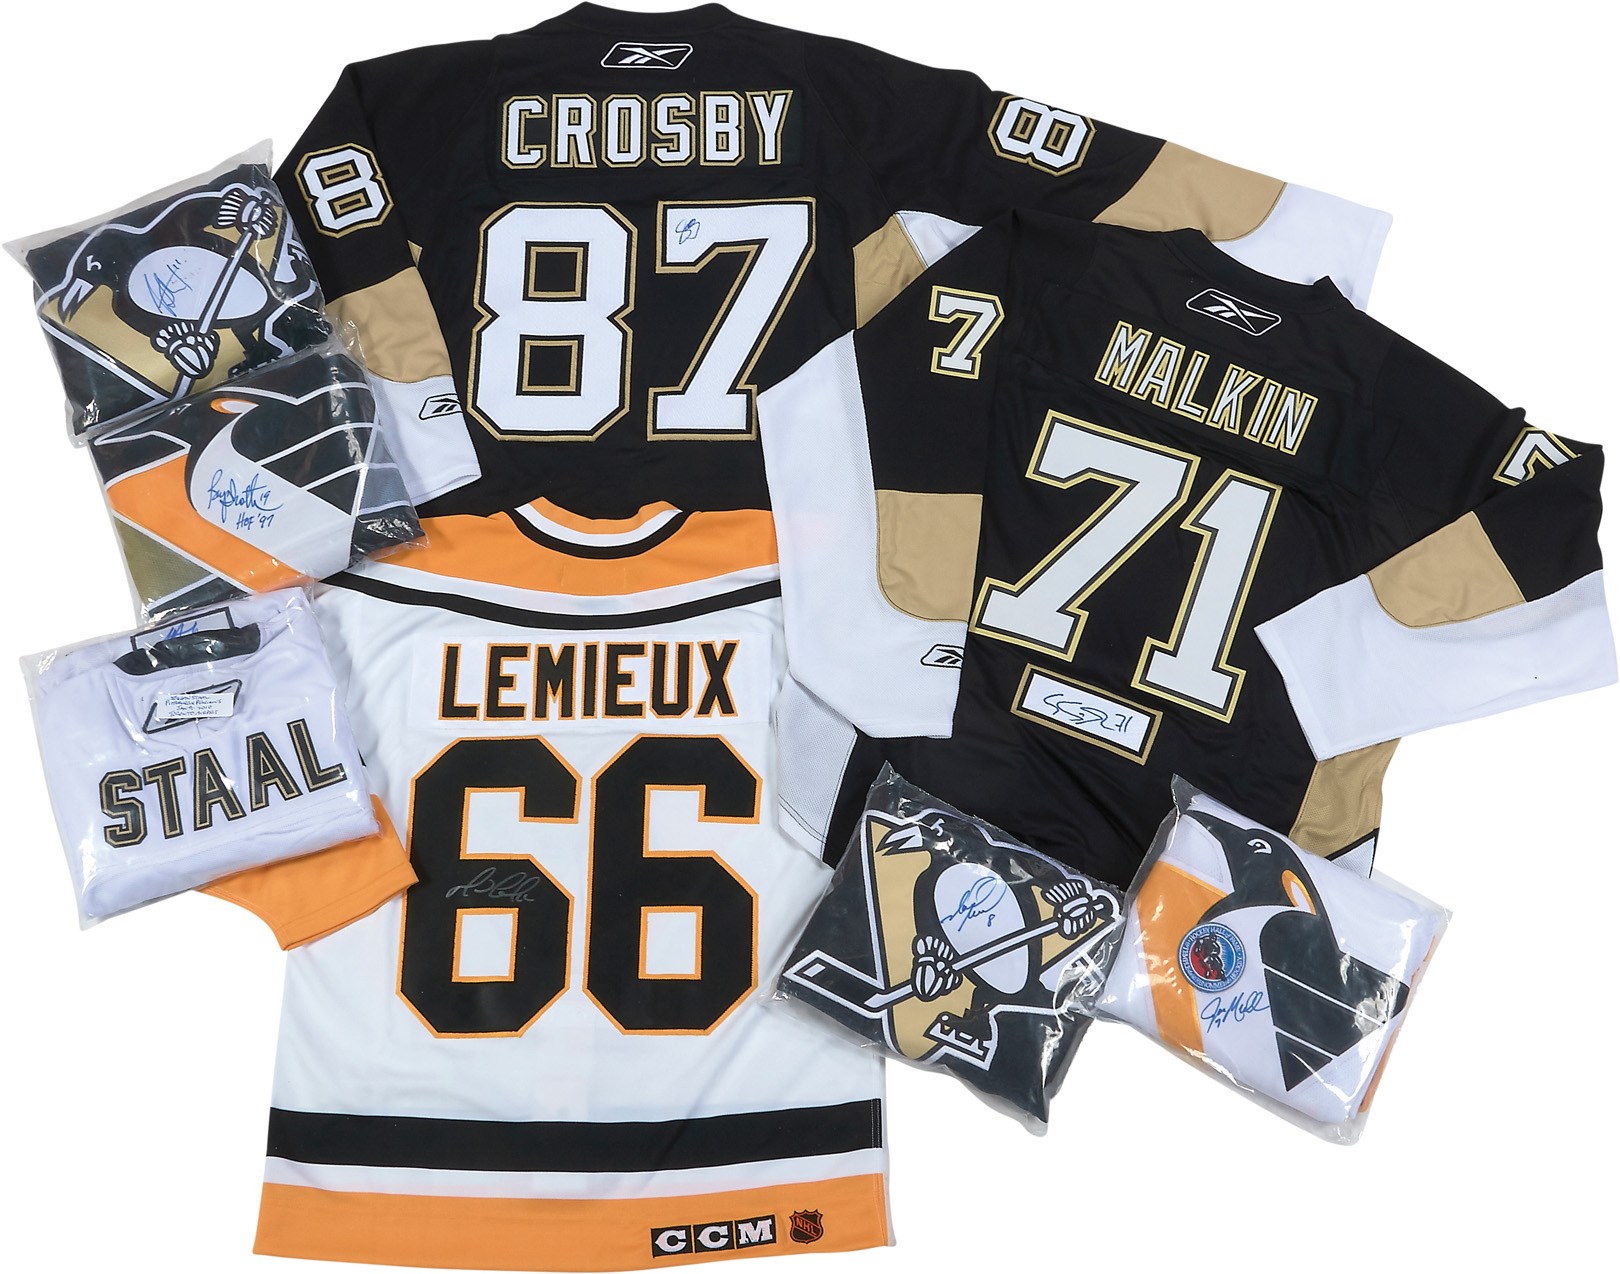 Hockey - Pittsburgh Penguins Greats Signed Jerseys w/Crosby & Lemieux (8)